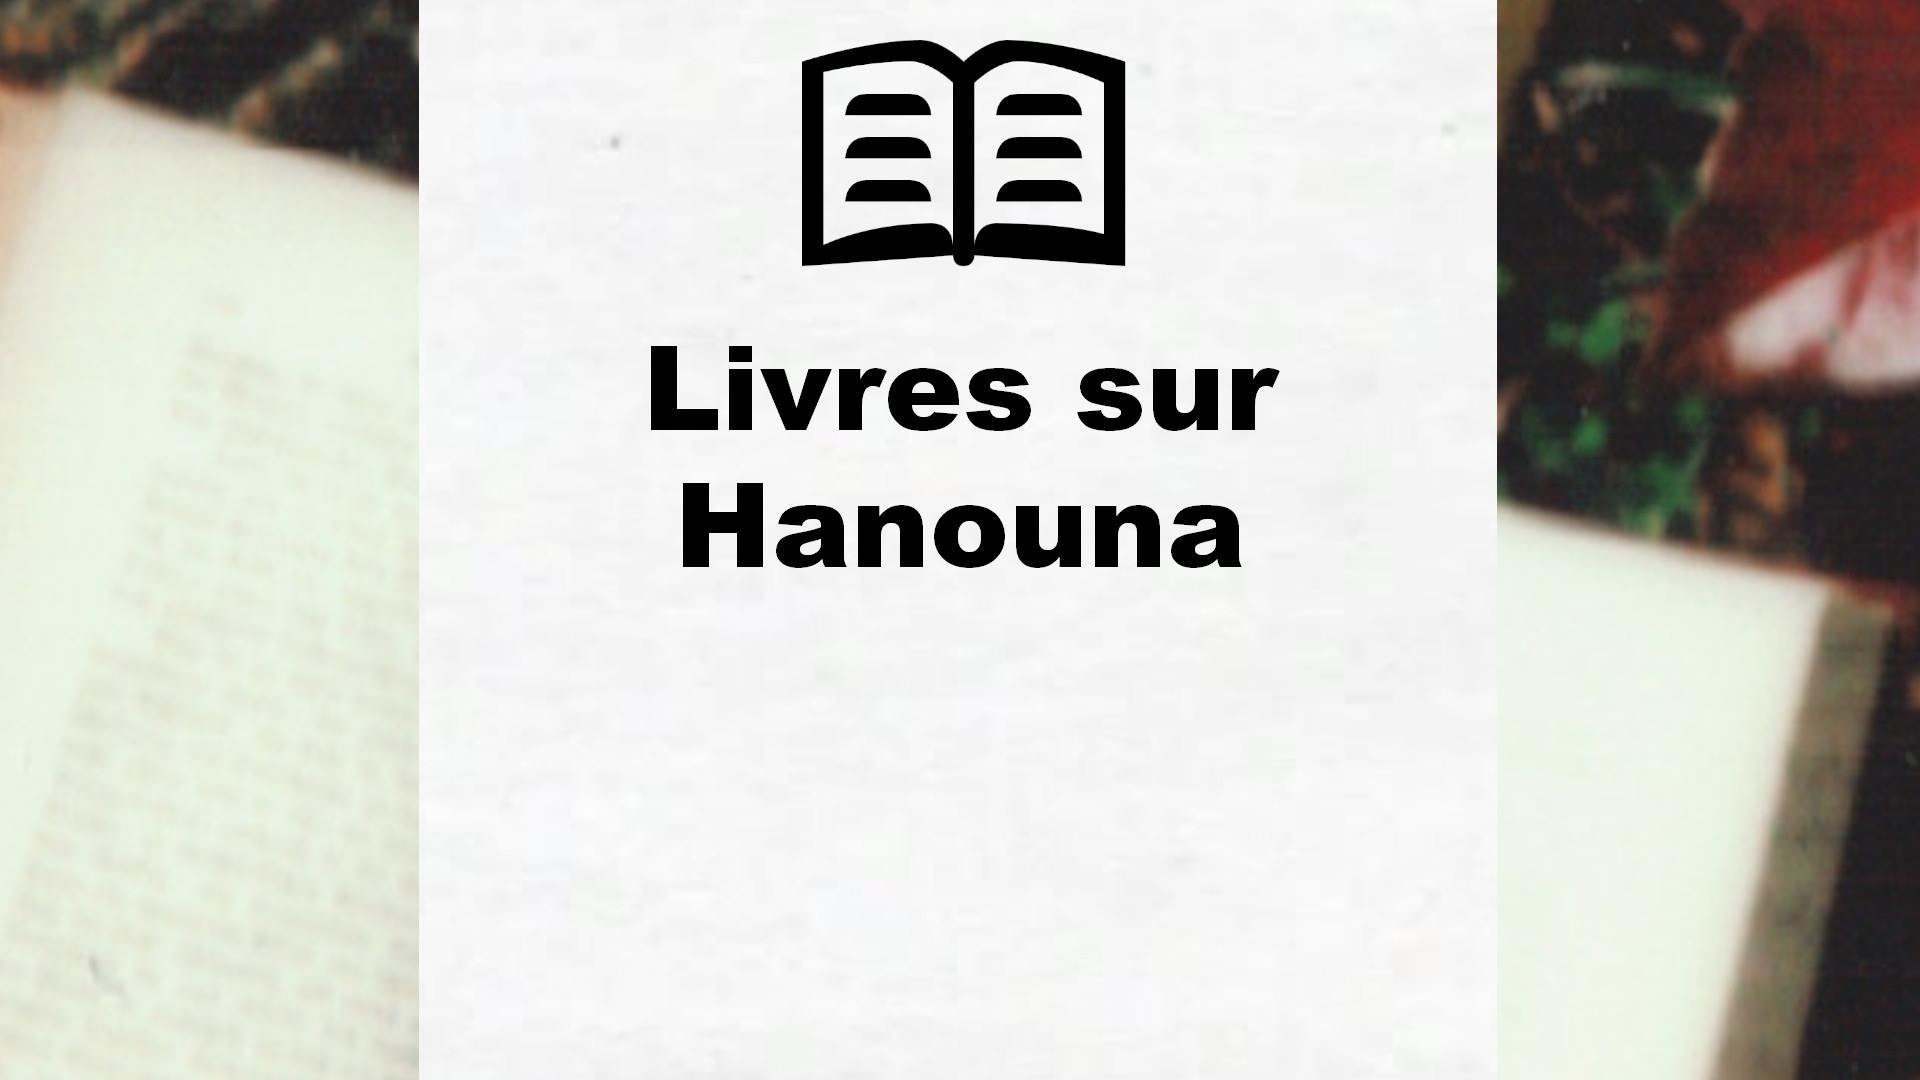 Livres sur Hanouna